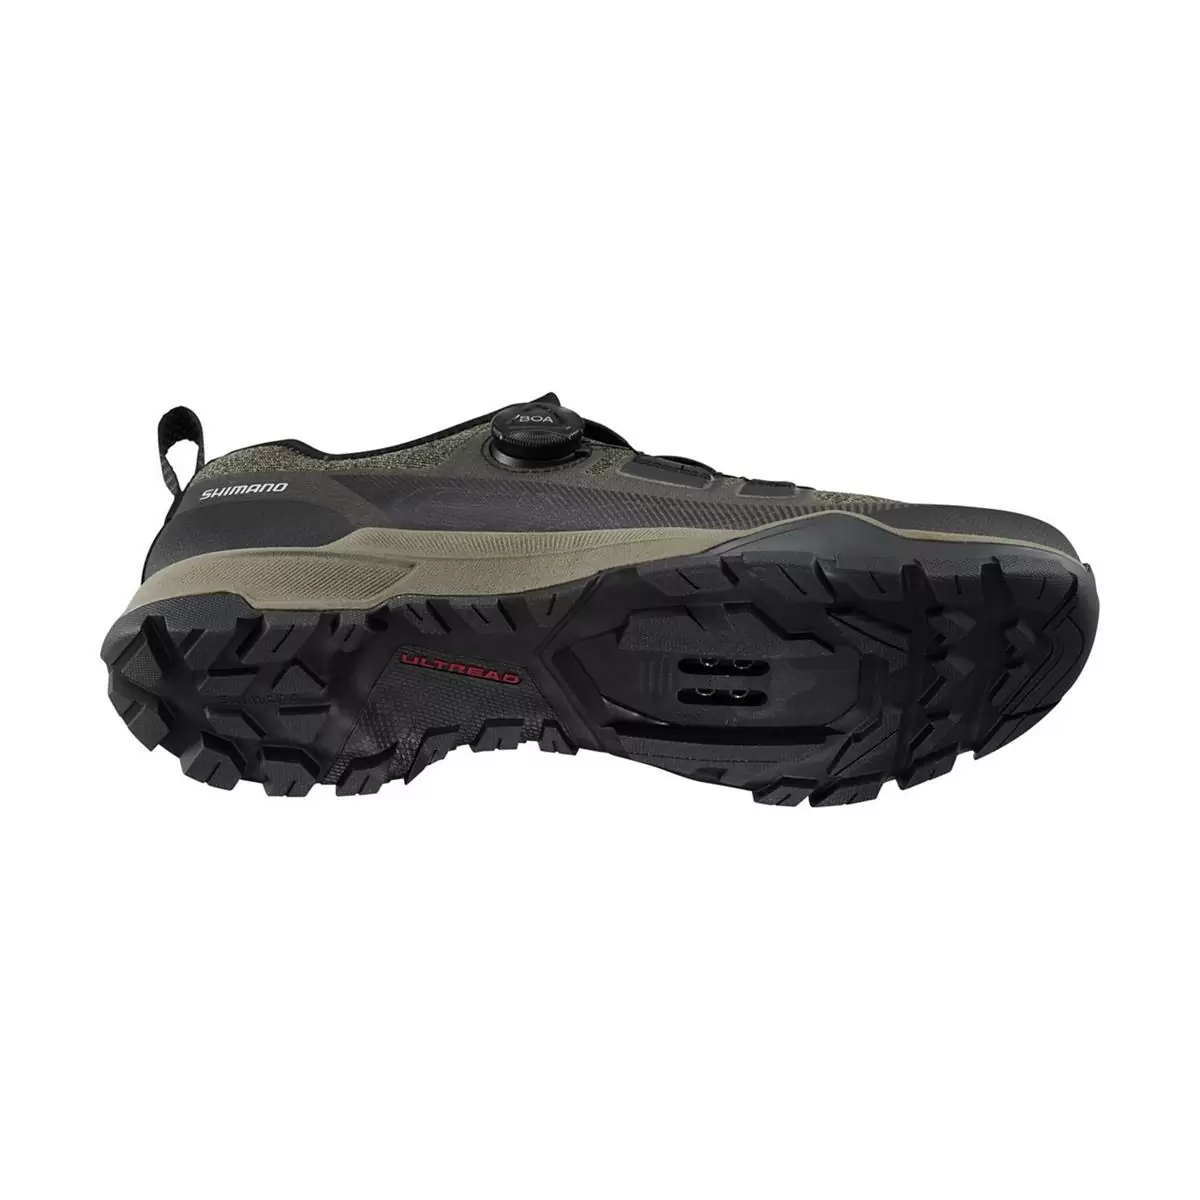 Trekking / MTB Shoes SH-EX700 Green Size 44 #2